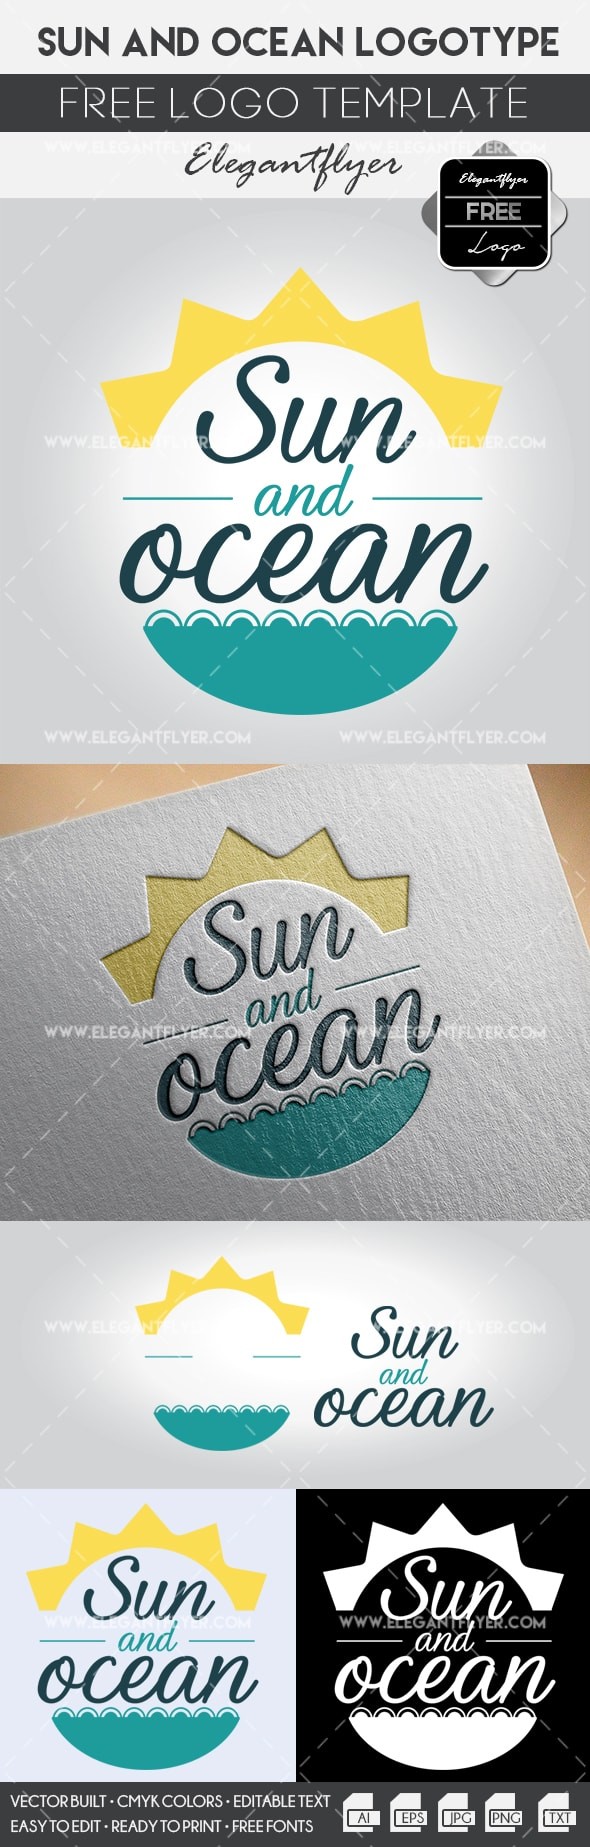 Sun and Ocean by ElegantFlyer